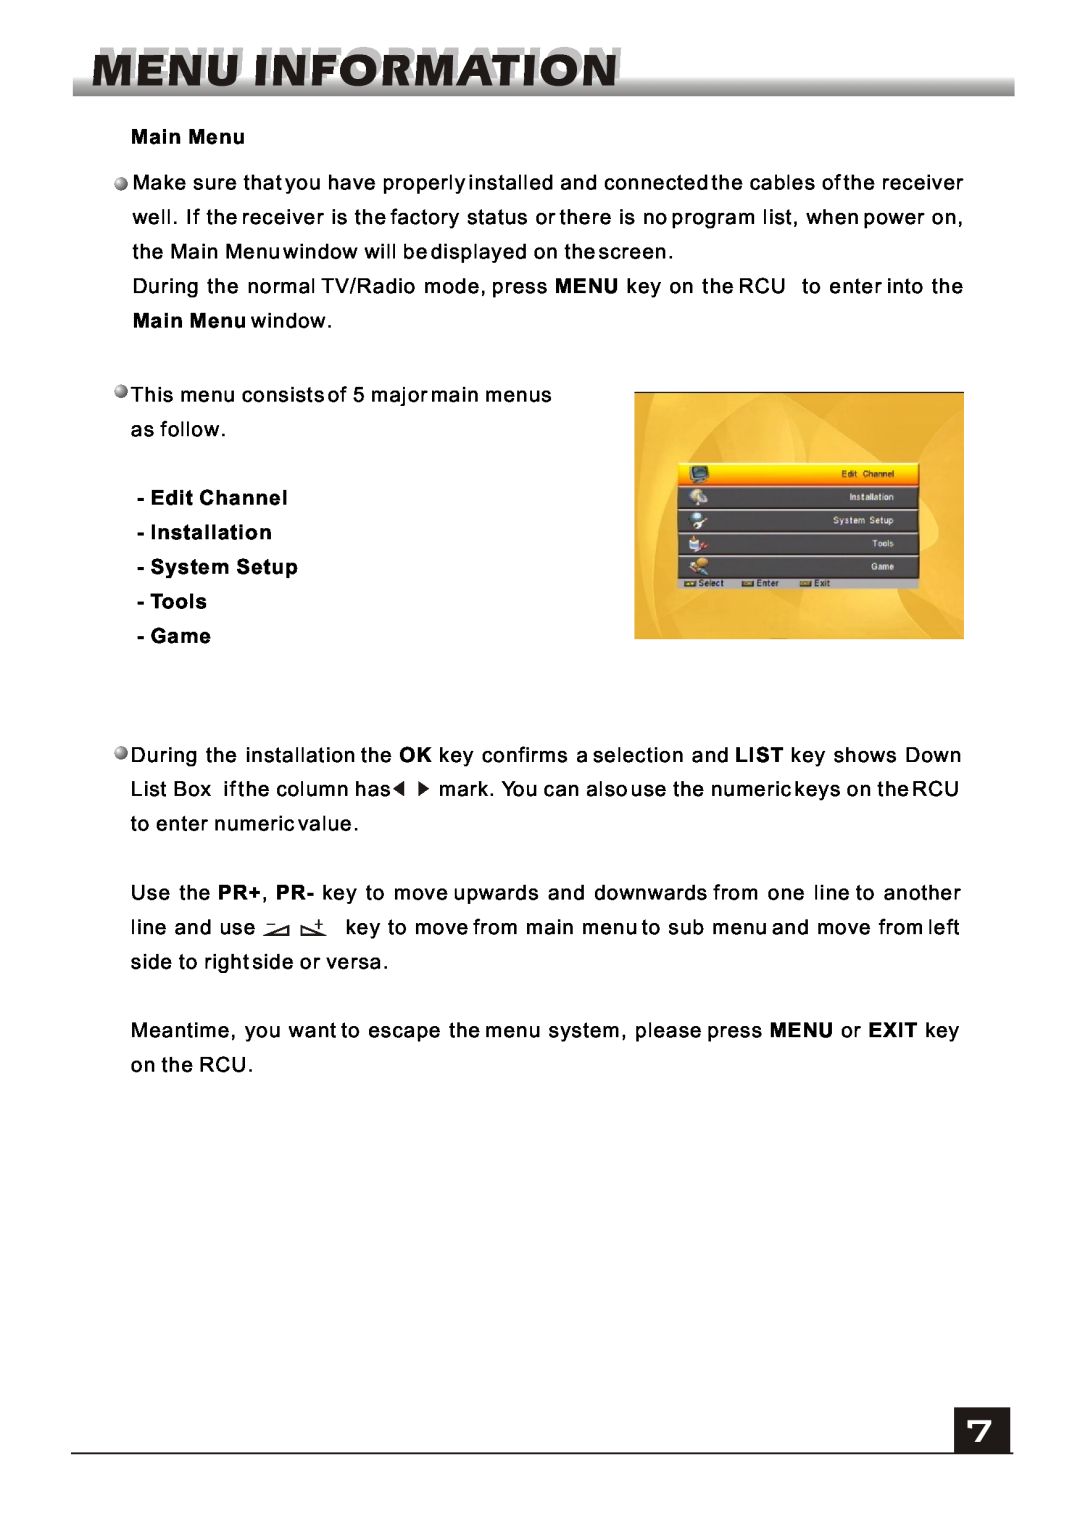 Fortec FS-4000v2 manual Main Menu, Edit Channel Installation System Setup Tools Game 